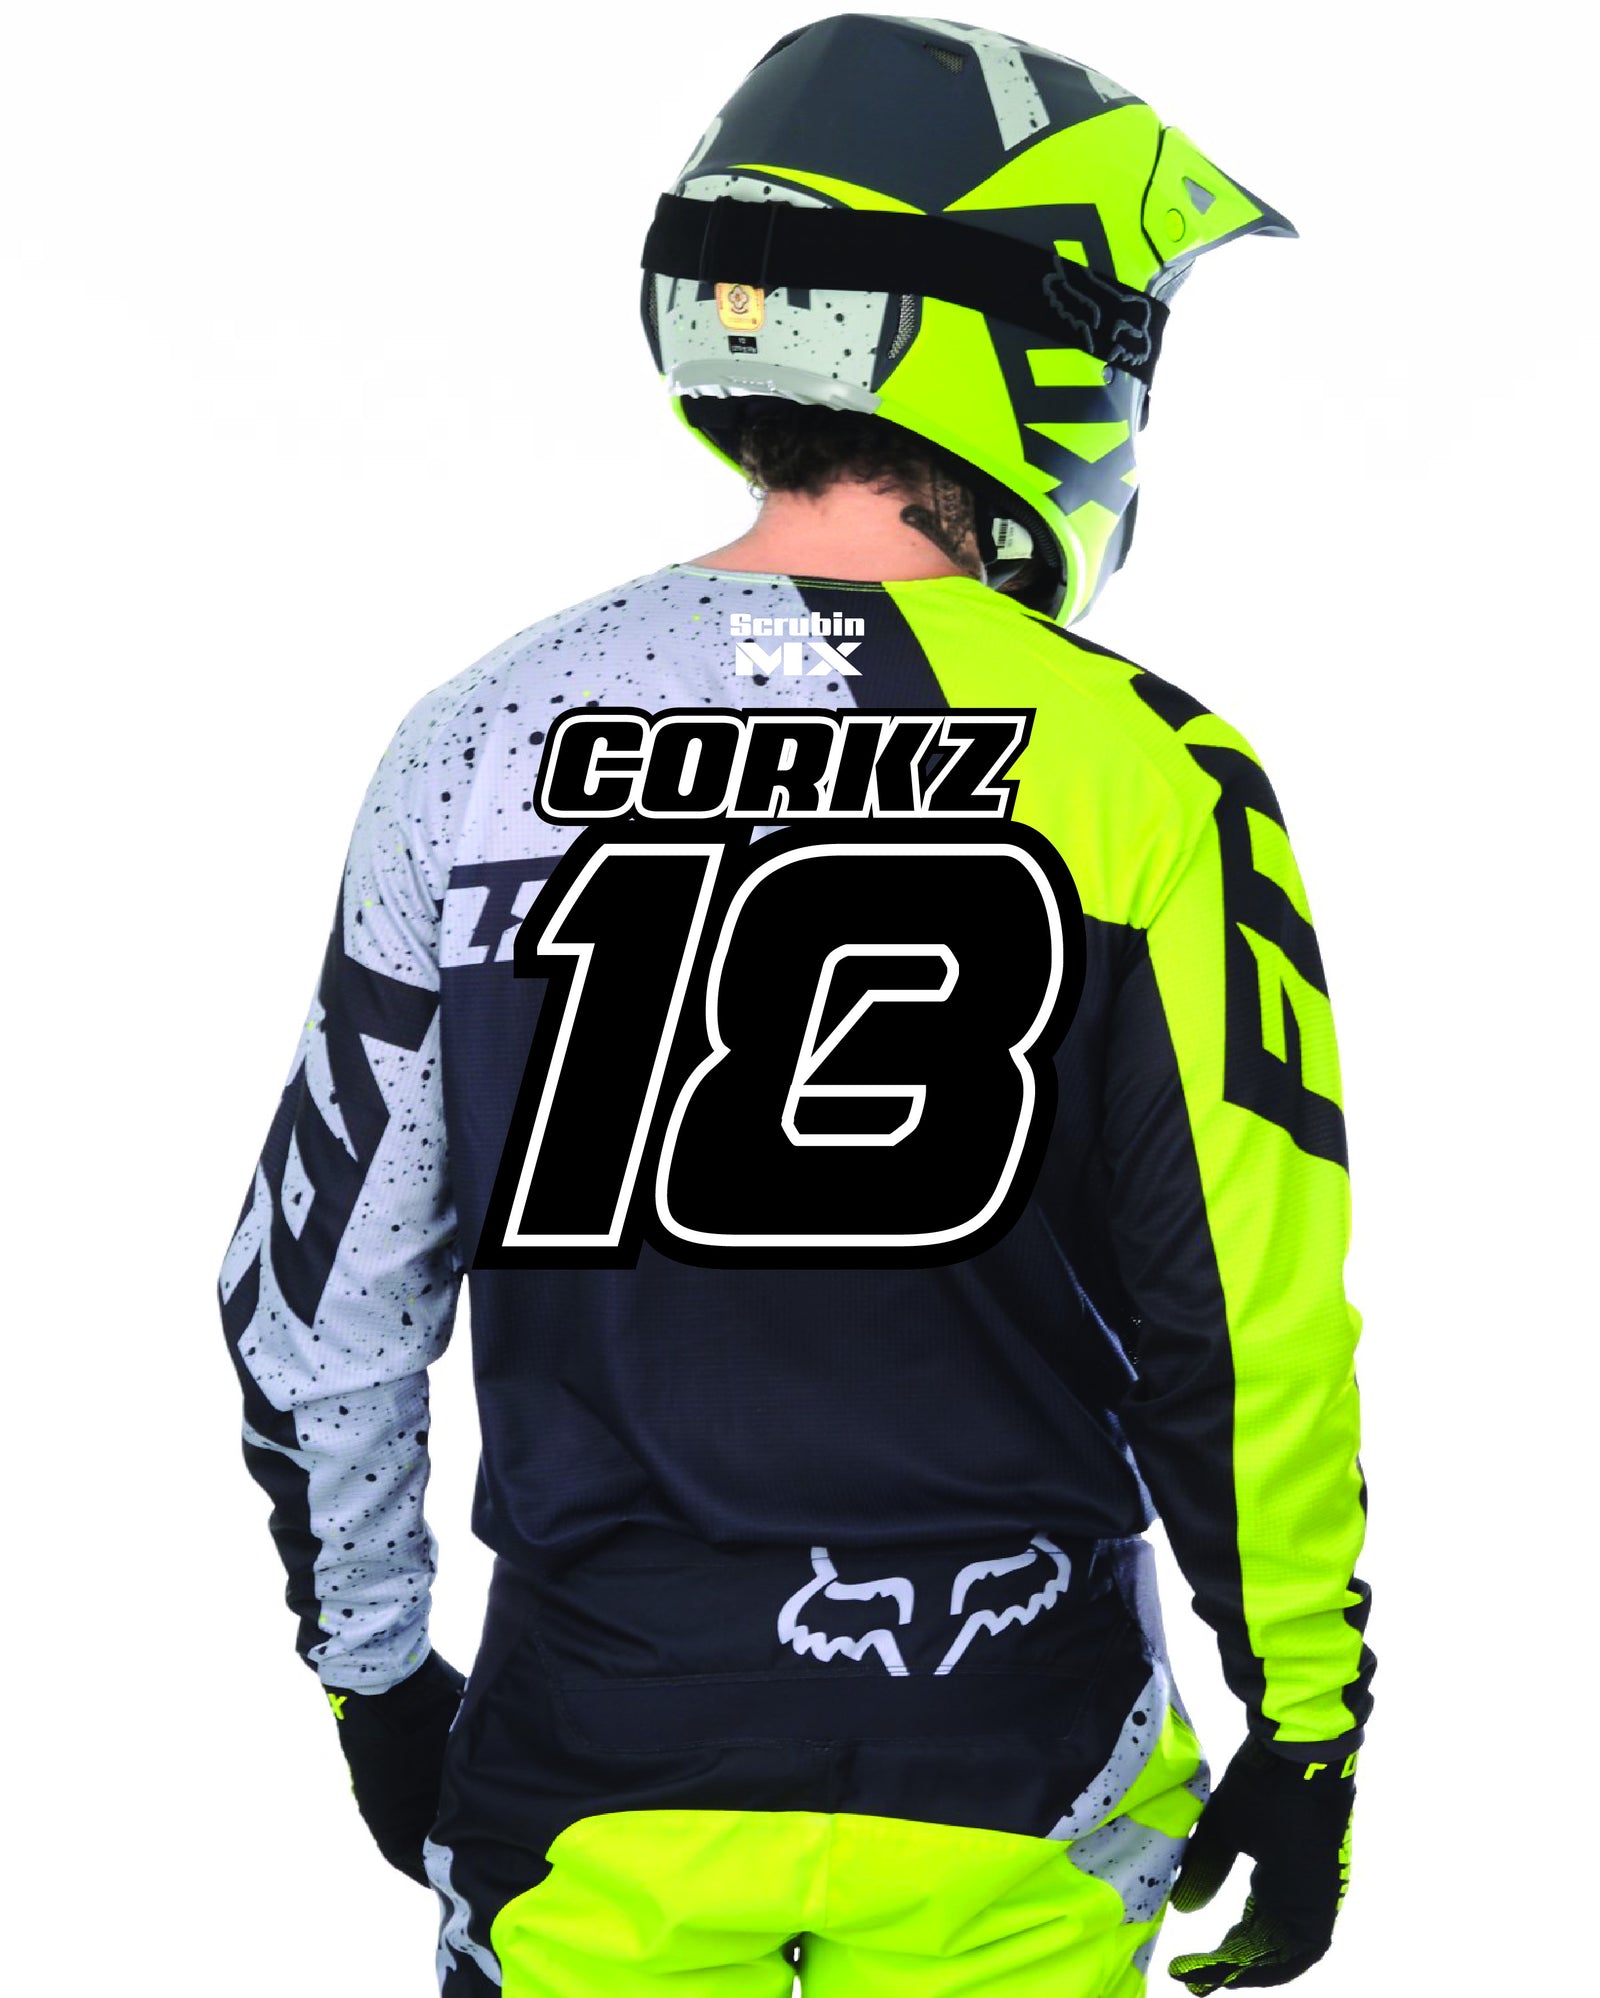 custom motocross jersey